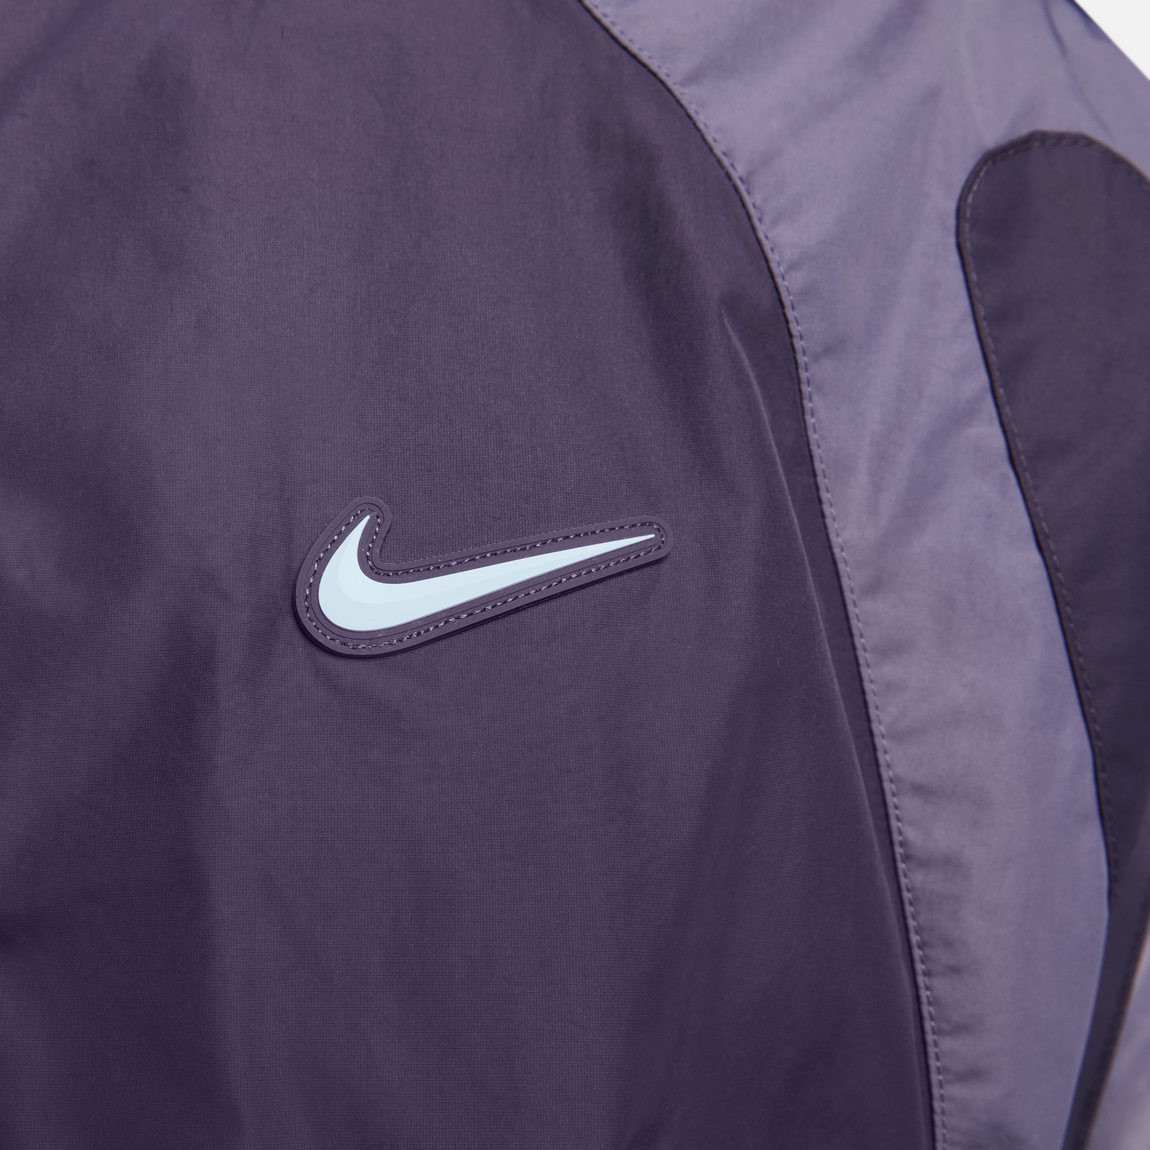 Nike X NOCTA Track Jacket (Dark Raisin/Daybreak-Cobalt Tint) - Nike X NOCTA Track Jacket (Dark Raisin/Daybreak-Cobalt Tint) - 